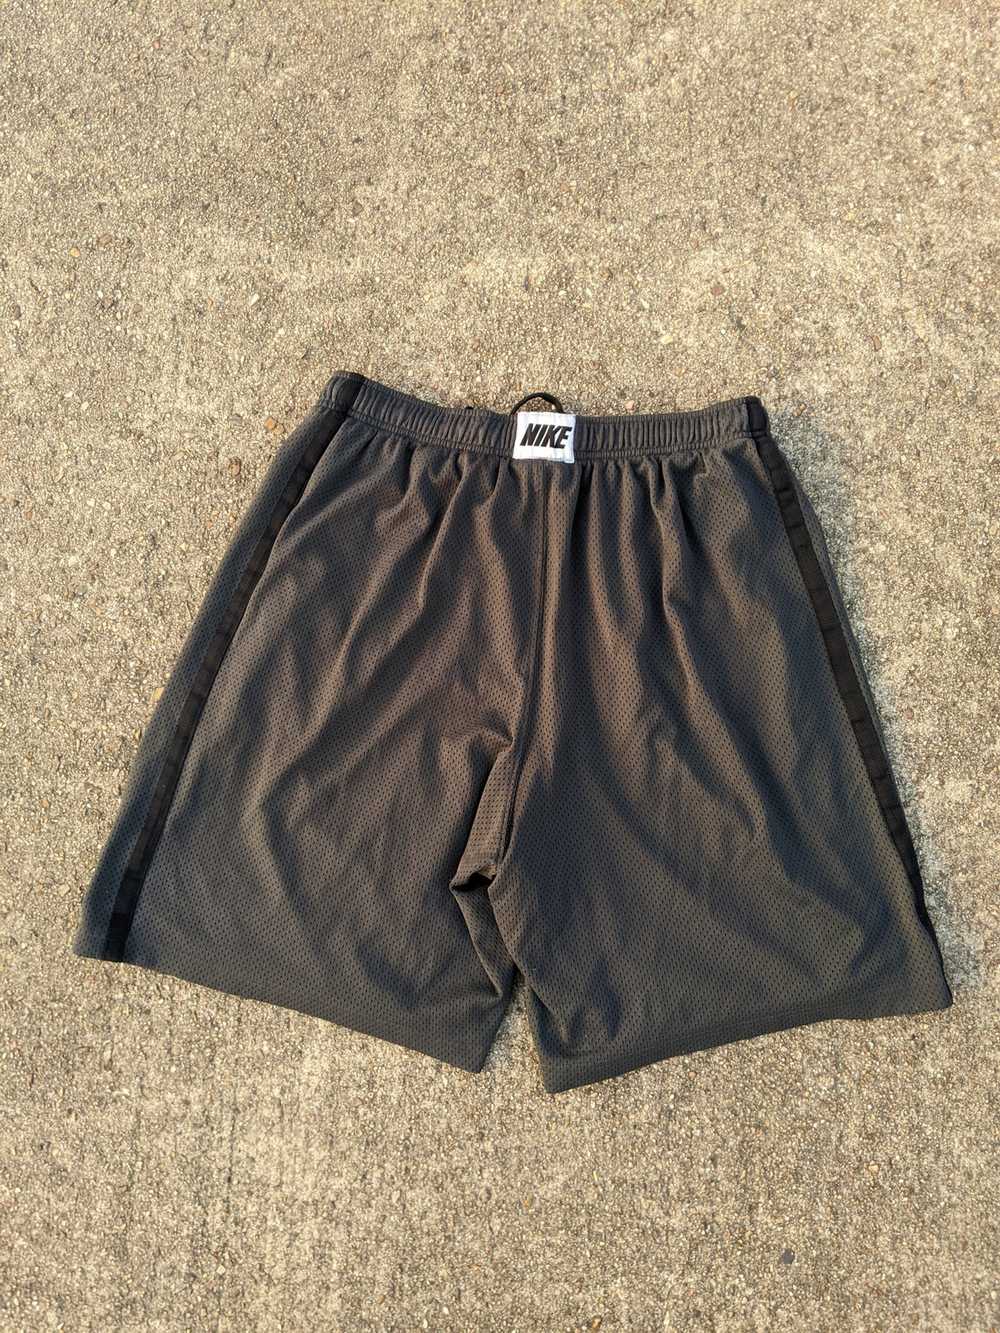 Nike Nike grey mesh sport shorts size XL shipping… - image 2